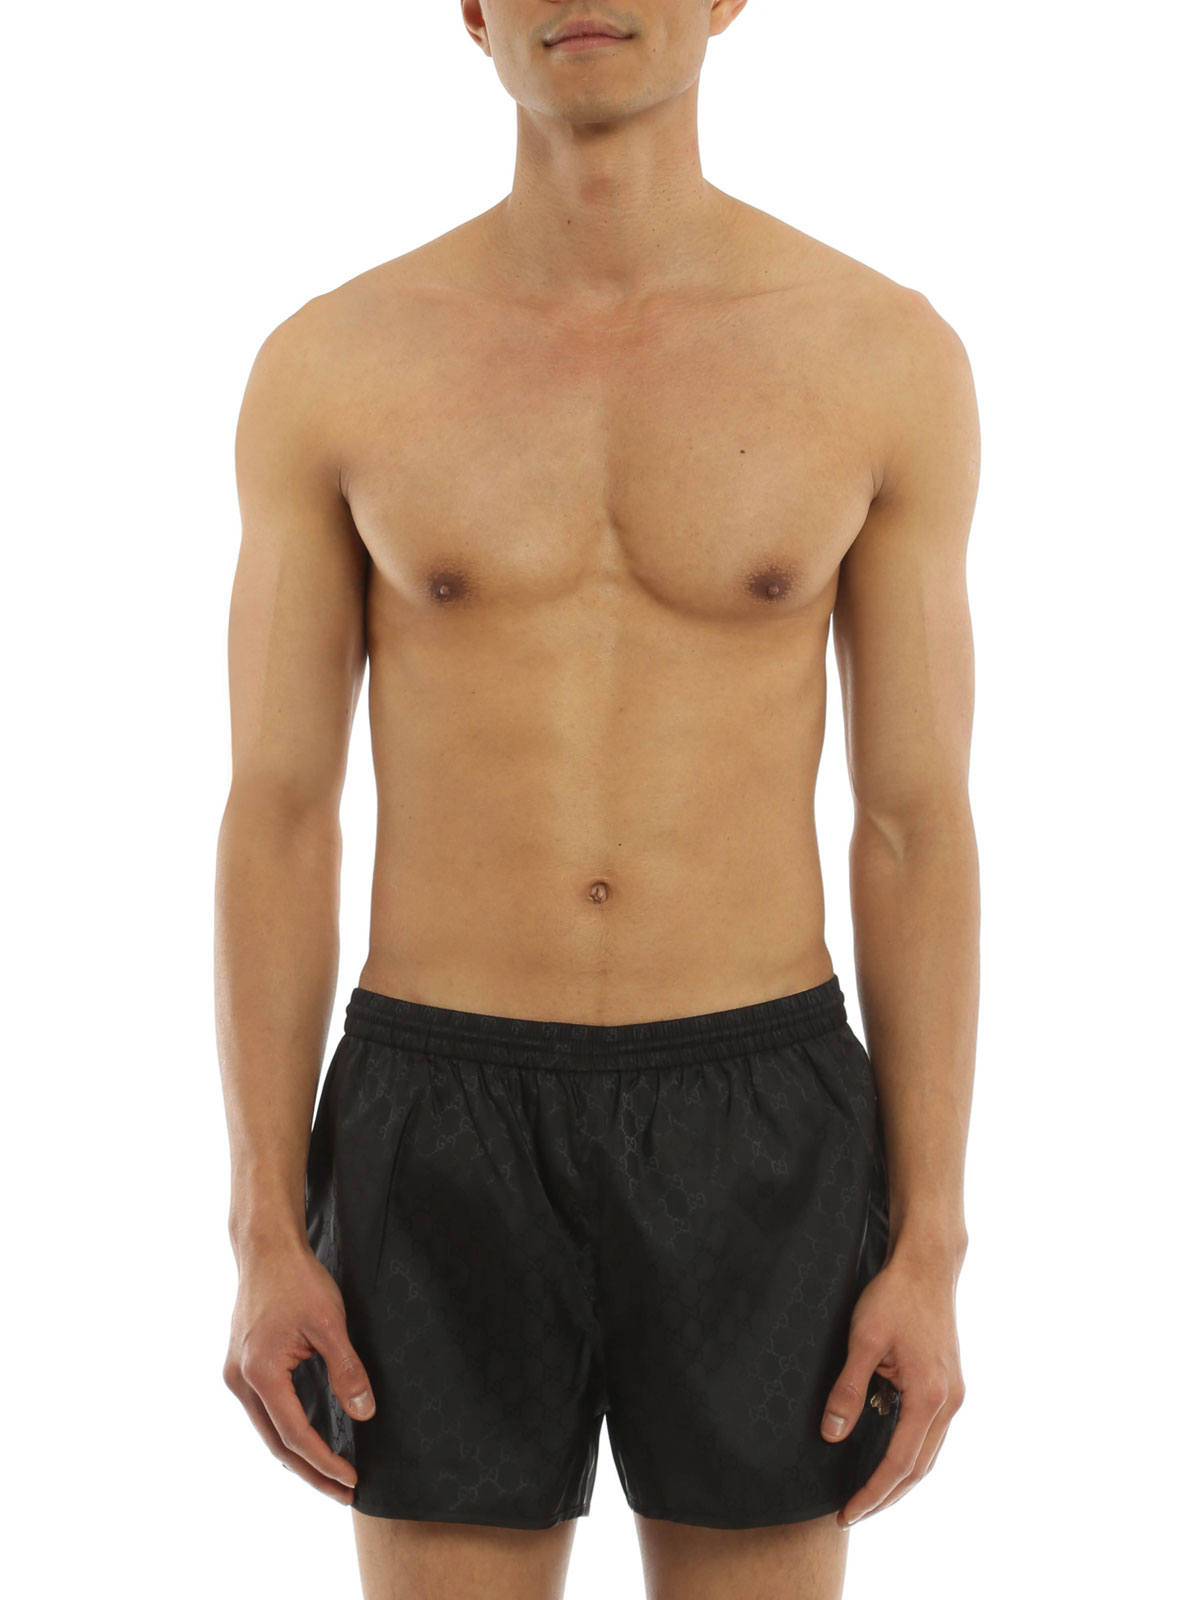 Gucci - GG Supreme swim shorts - Swim shorts & swimming trunks - 410571 XT455 1000